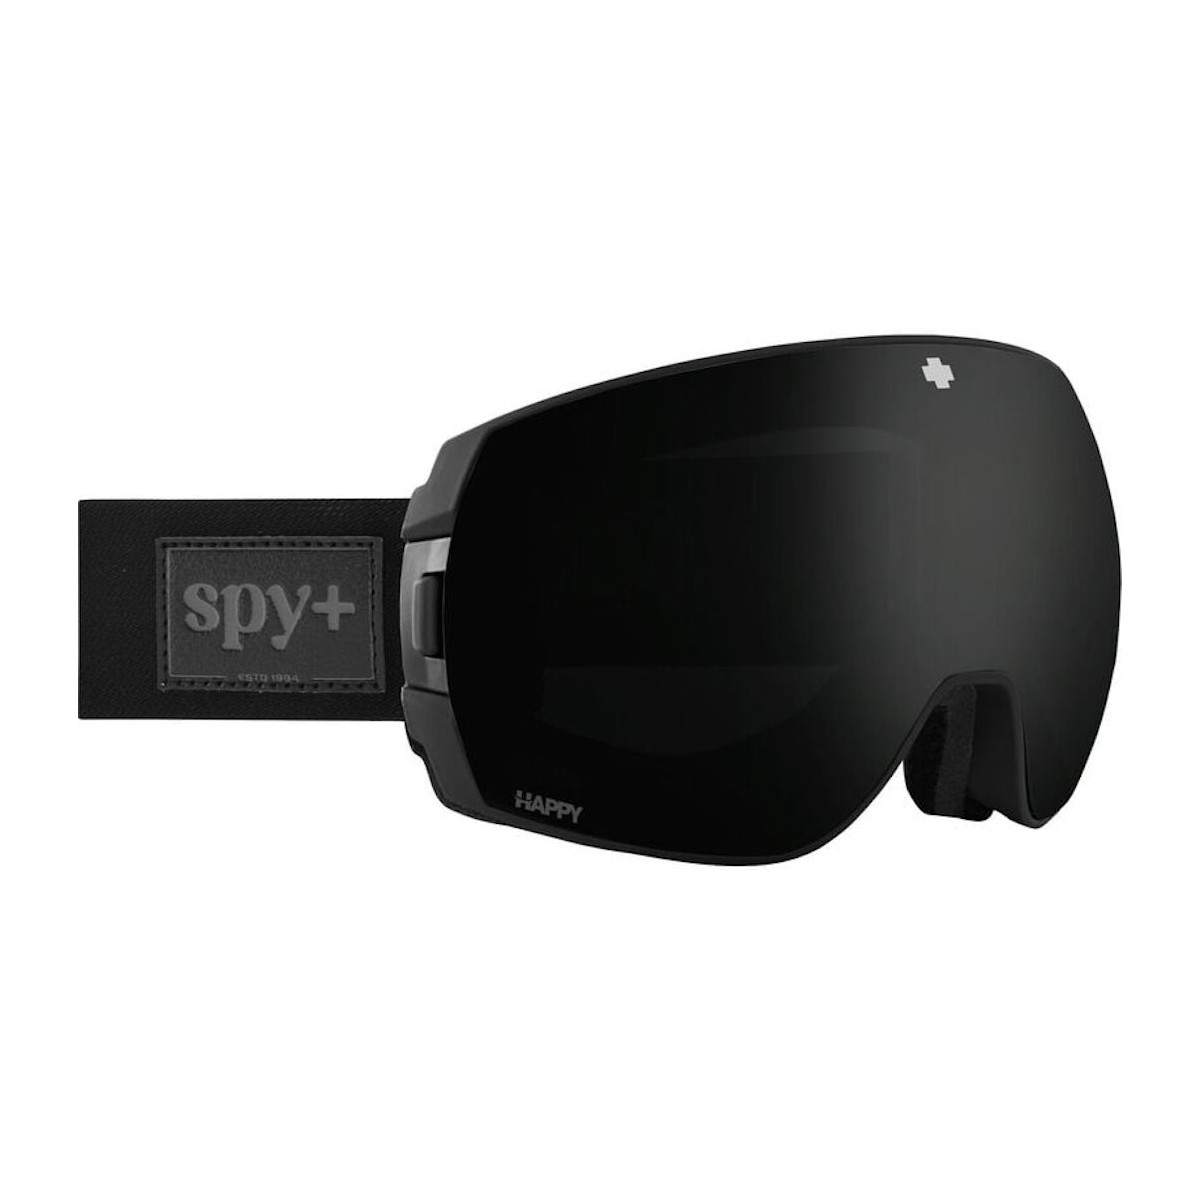 SPY LEGACY SNOW goggles - black rf